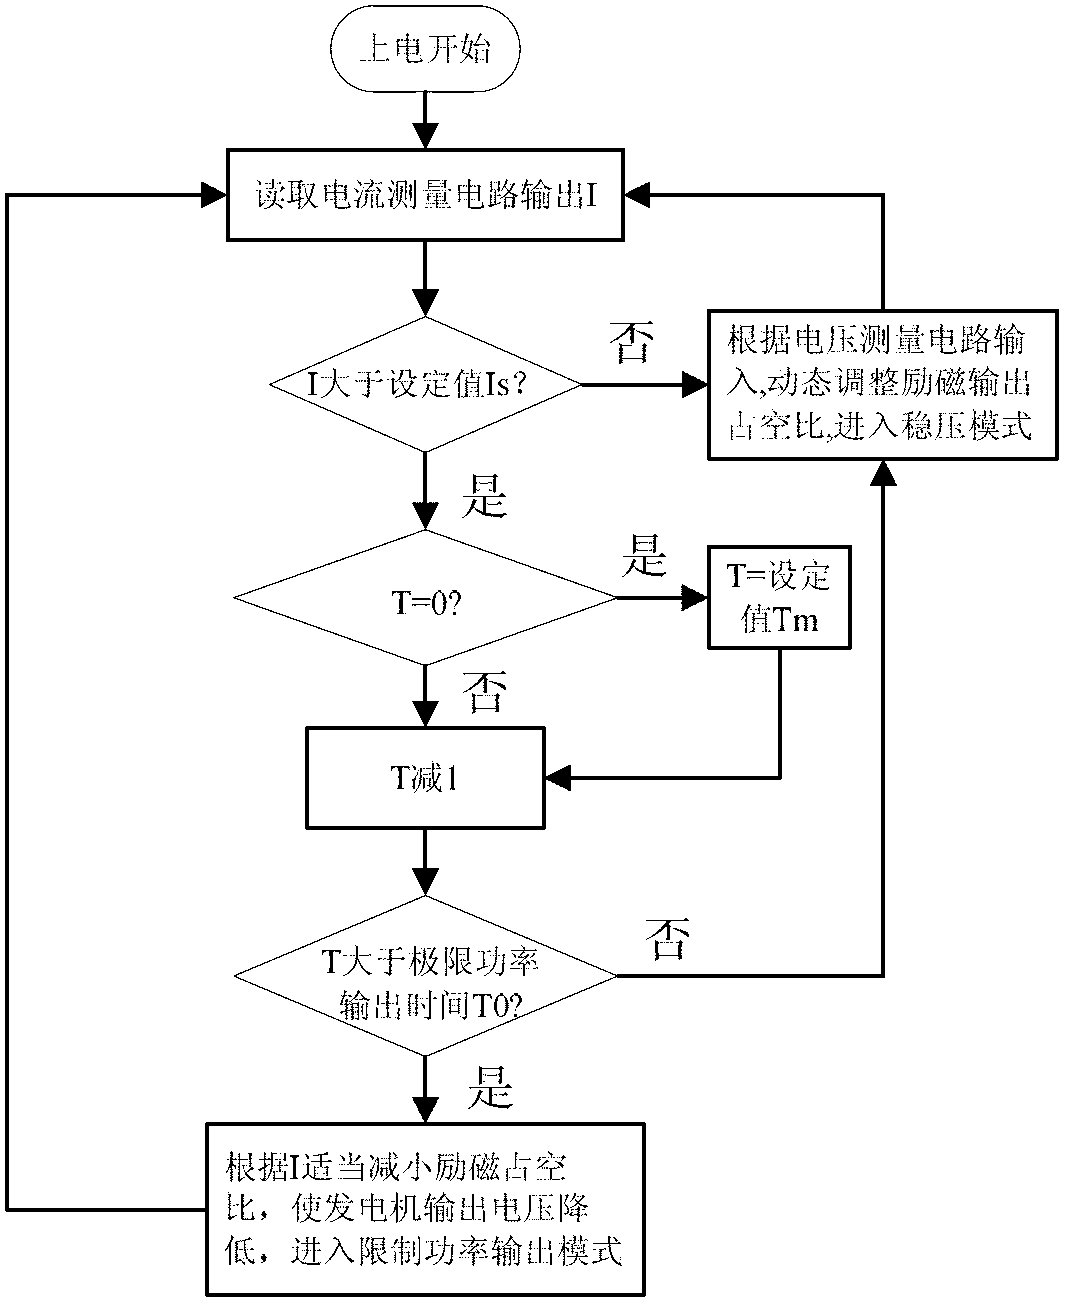 Generator excitation control system